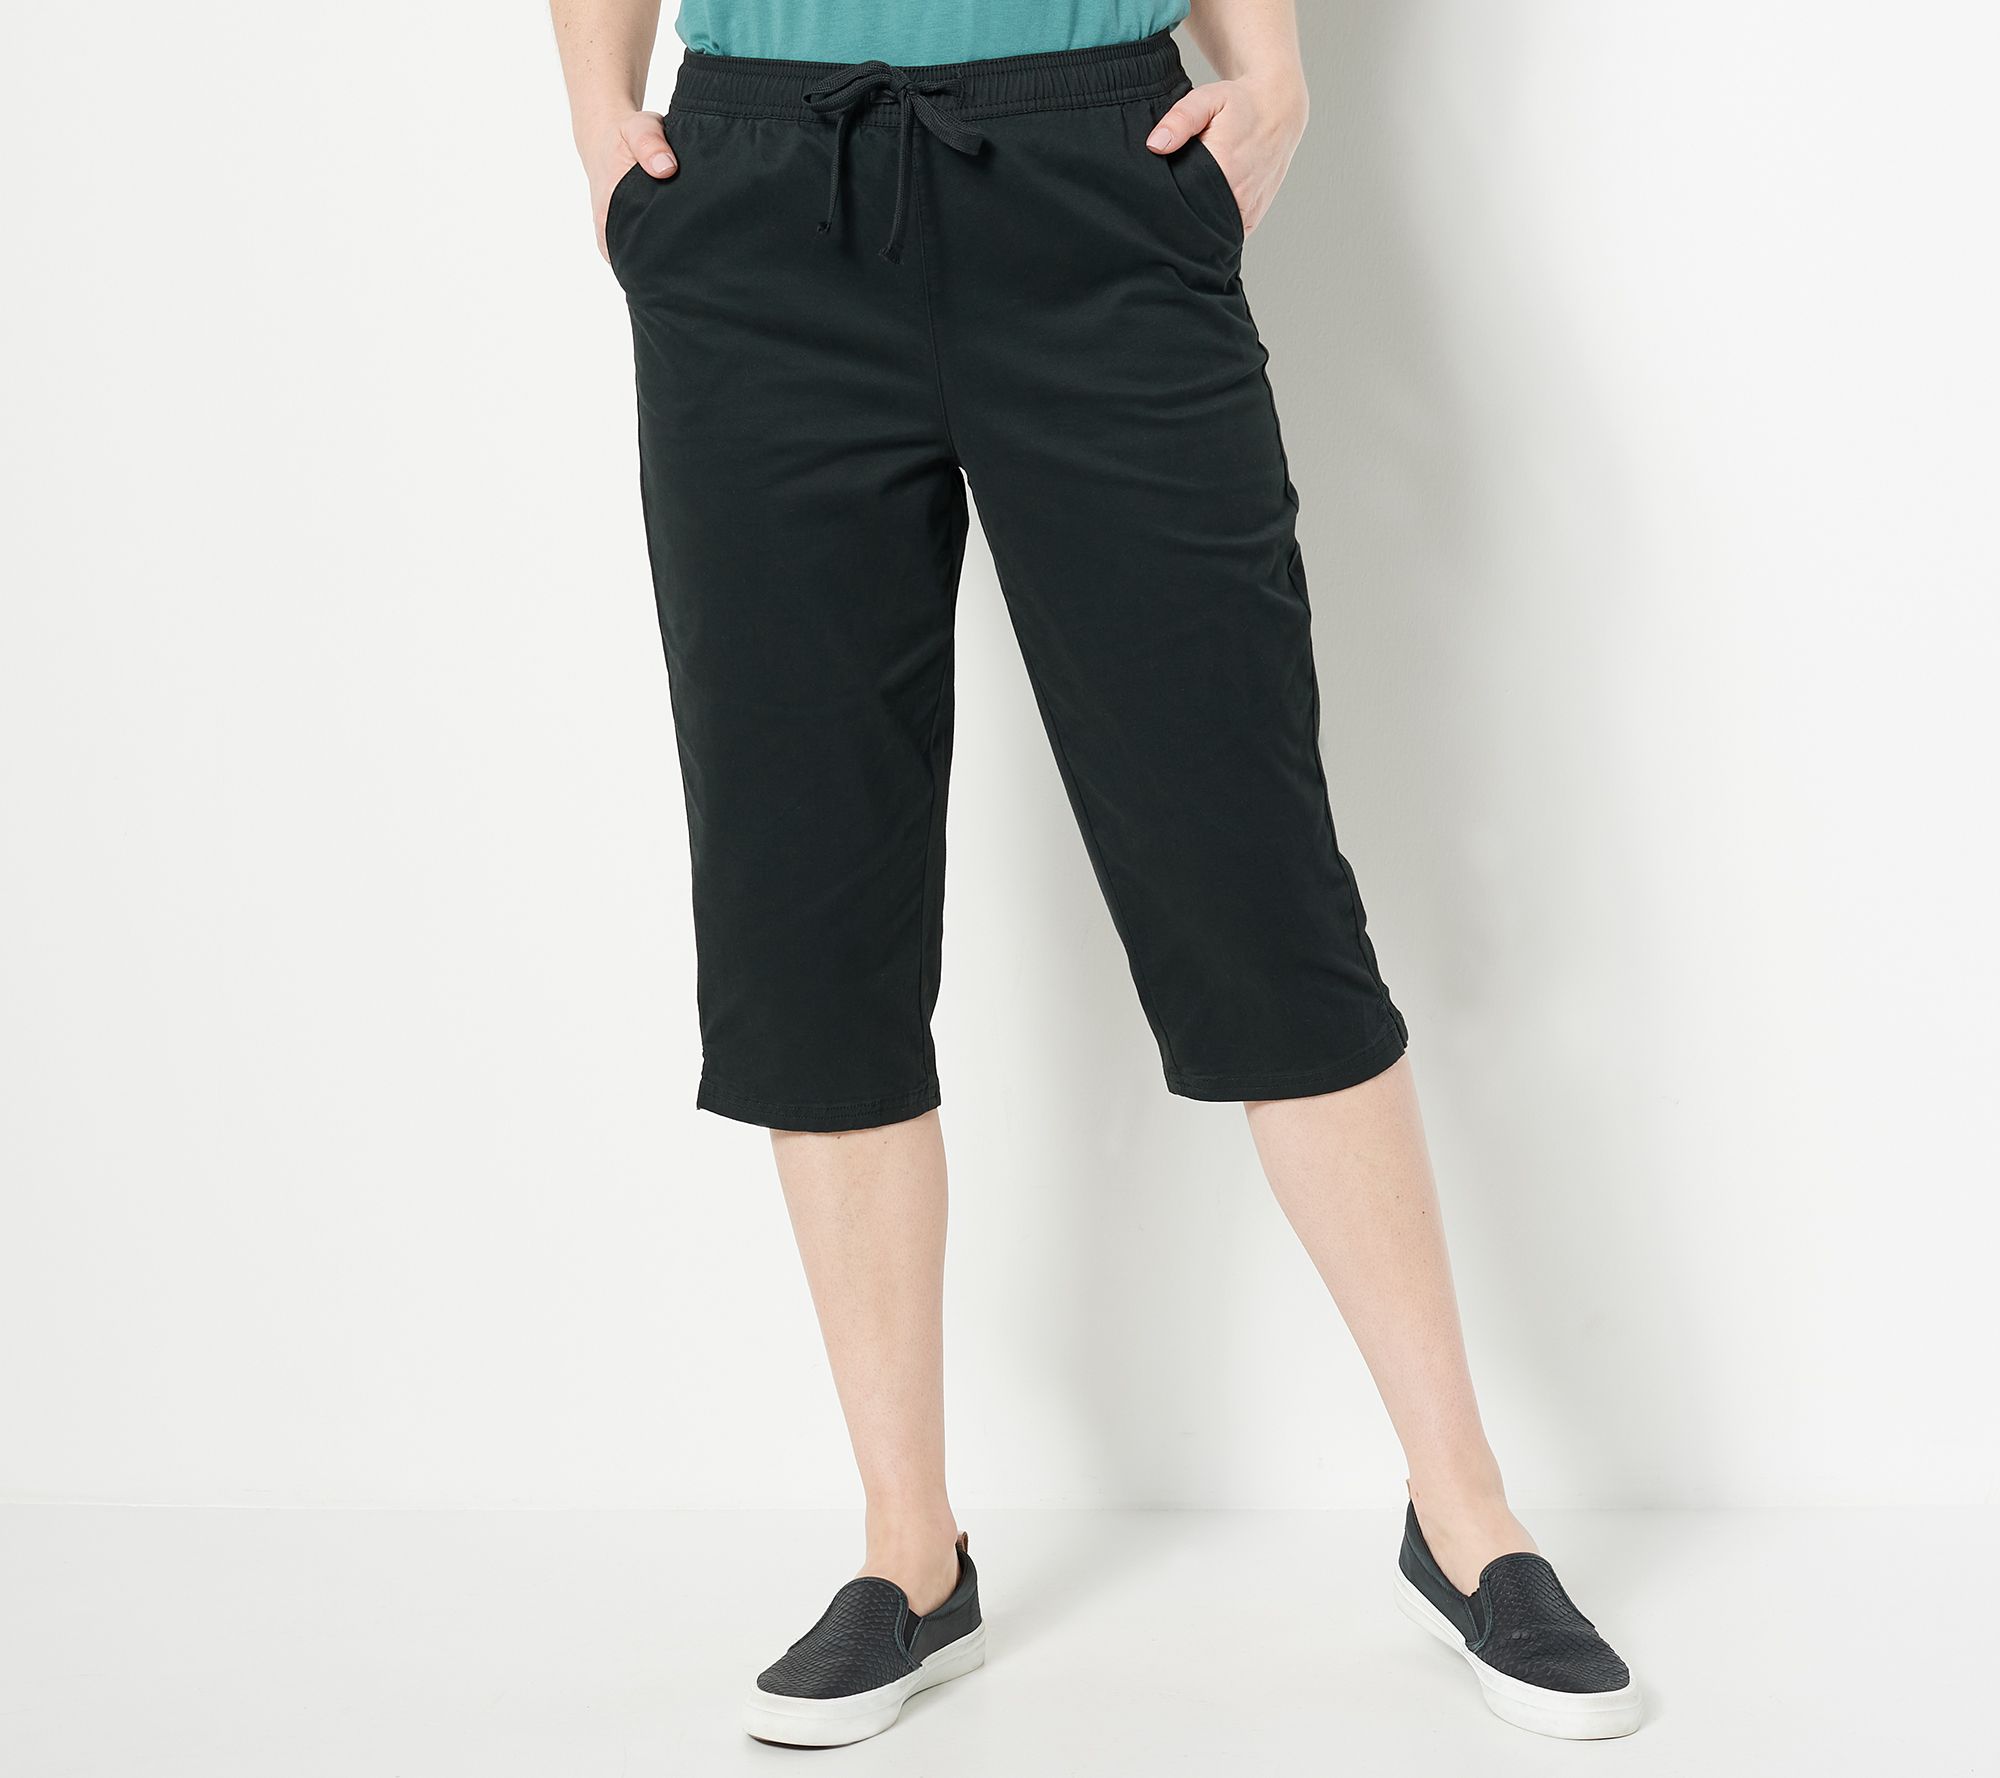 Style & Co. Drawstring-Waist Skimmer Shorts (Uniform Blue, S) 